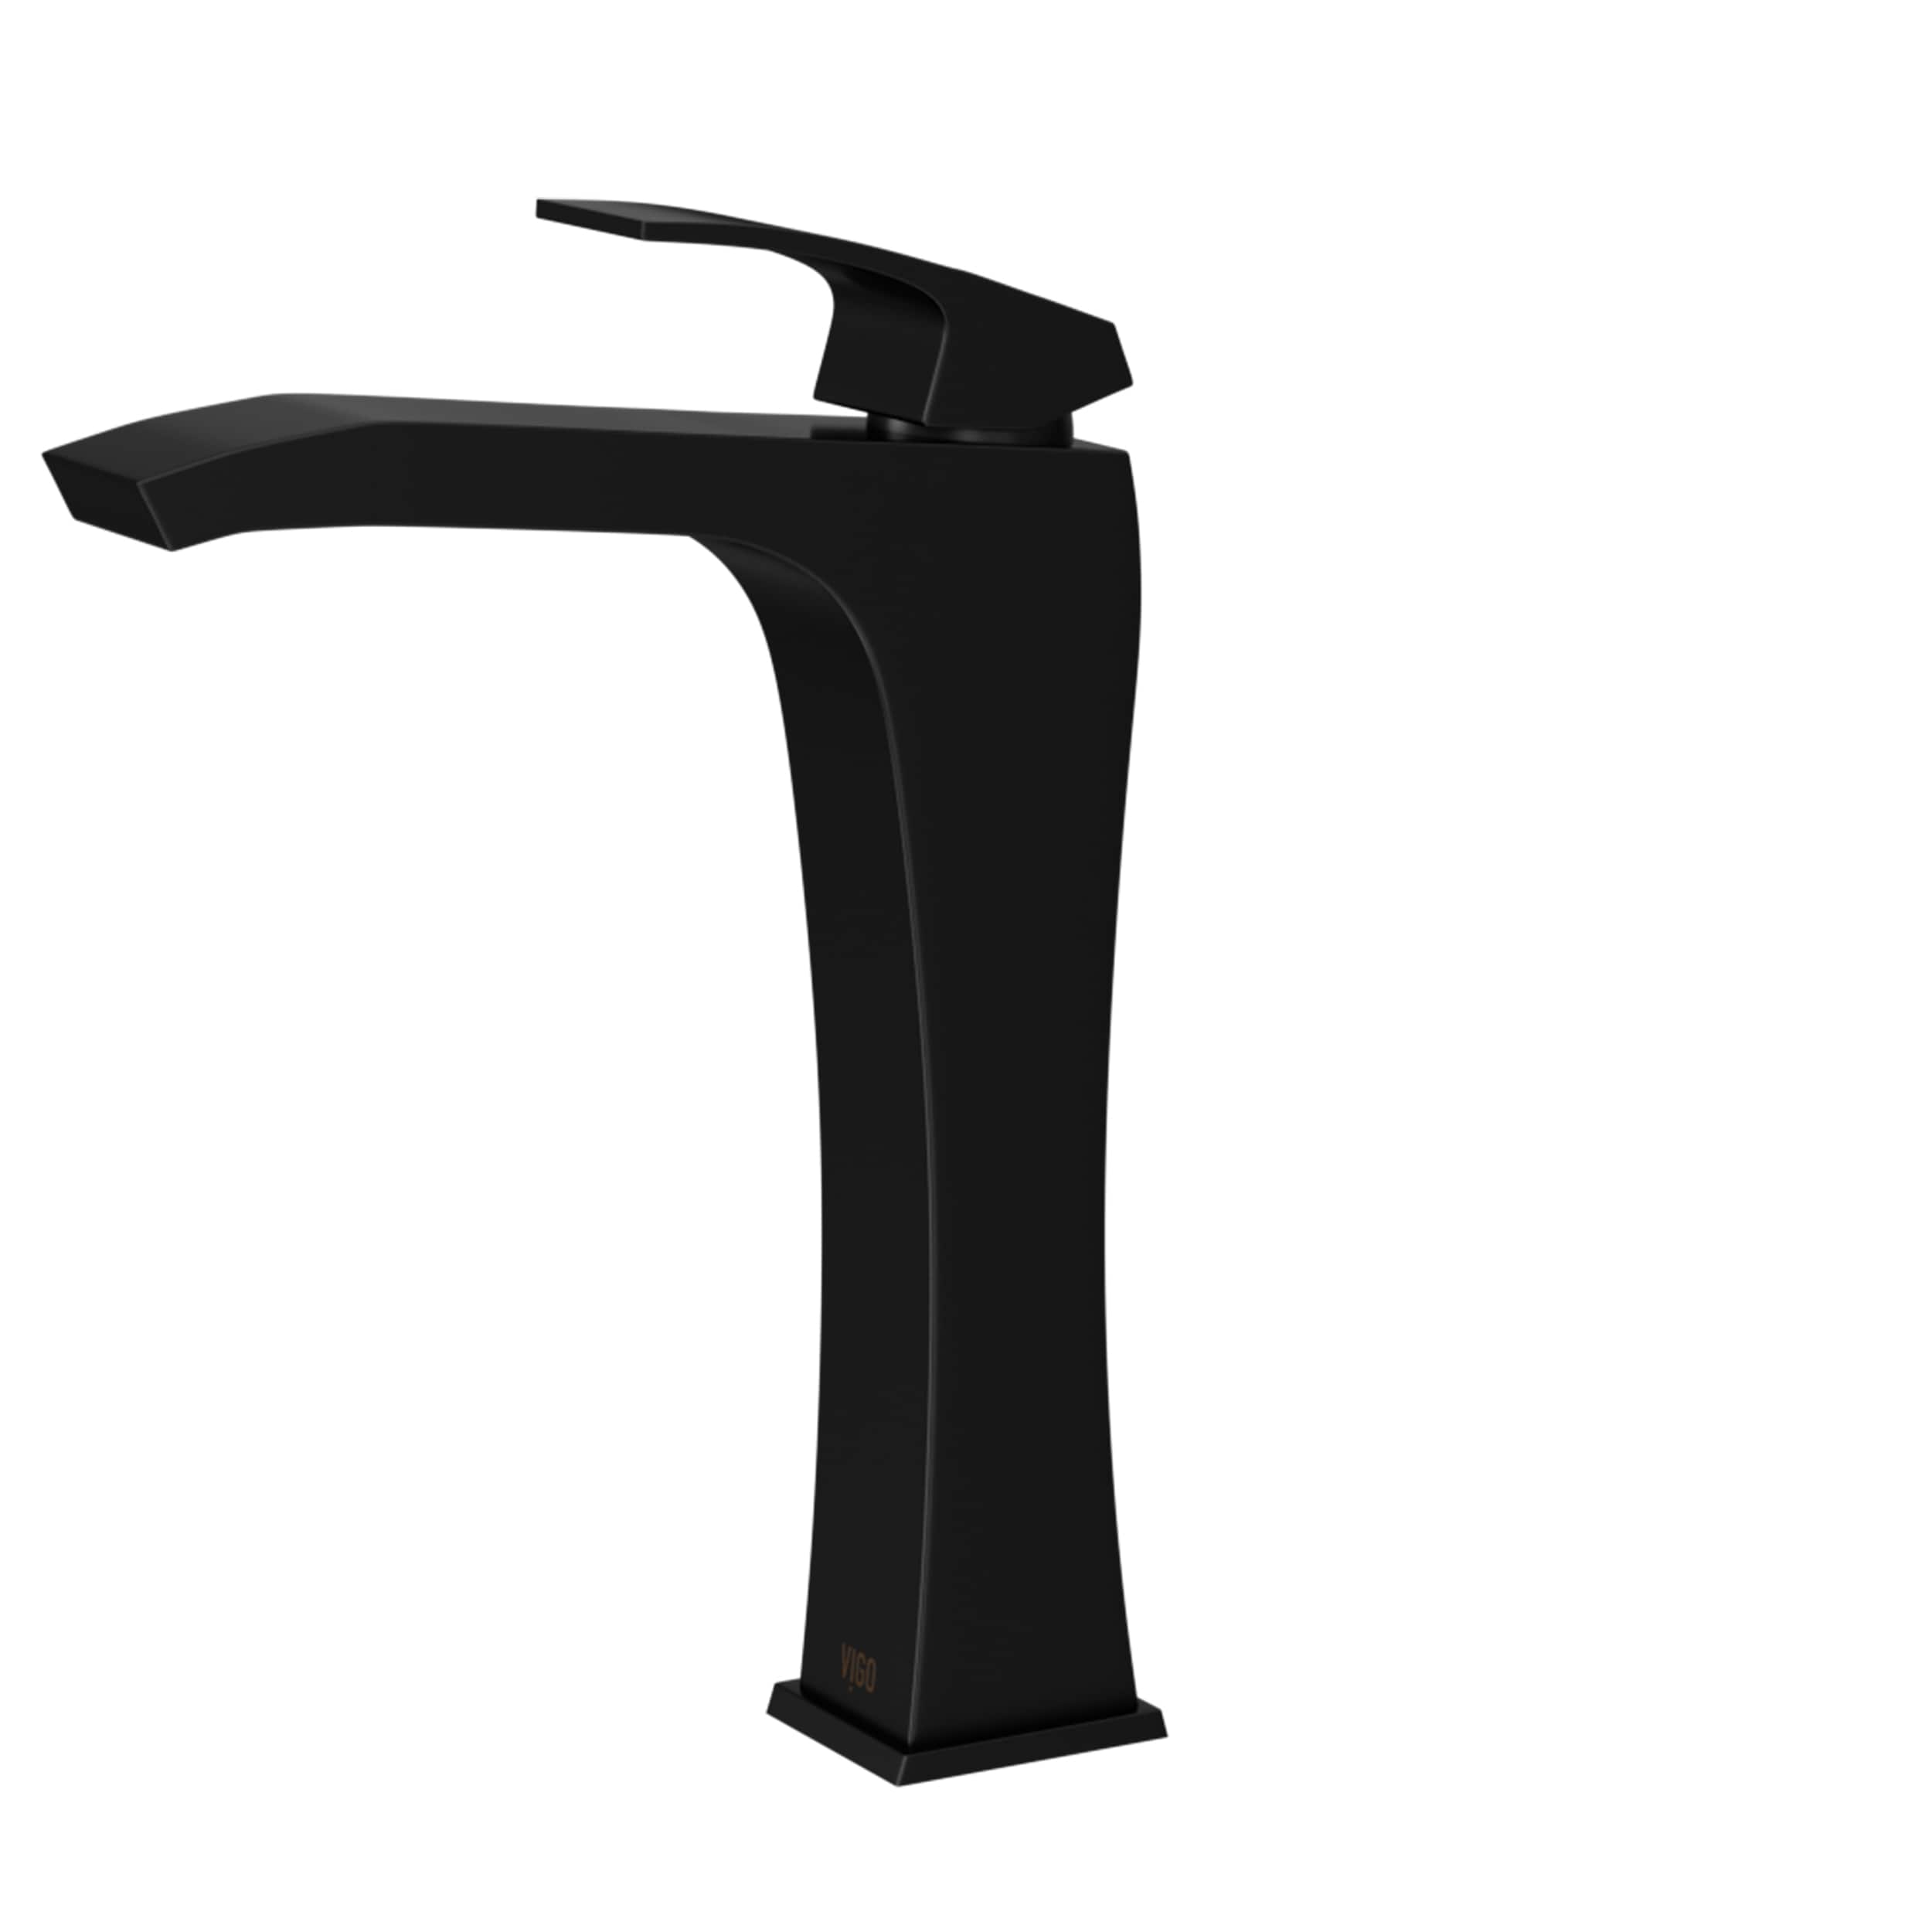 Blackstonian VG03018MB Single-Handle Vessel Bathroom Sink Faucets in Matte Black 